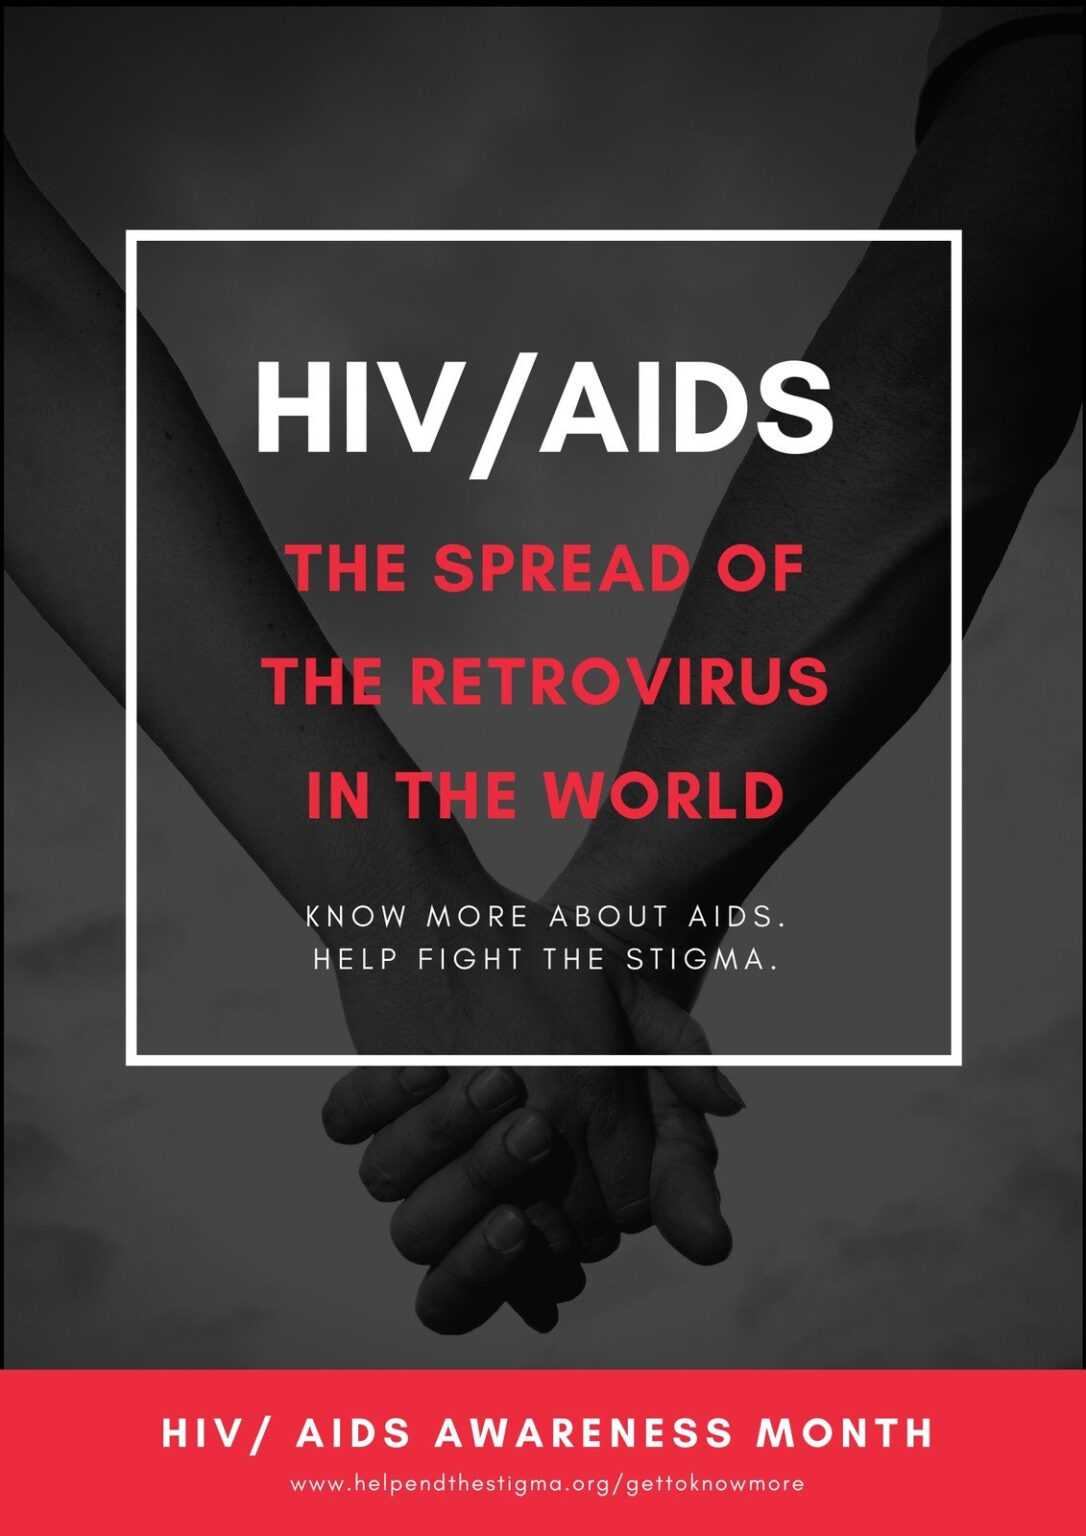 monochrome-photo-hiv-aids-awareness-poster-templatescanva-in-hiv-aids